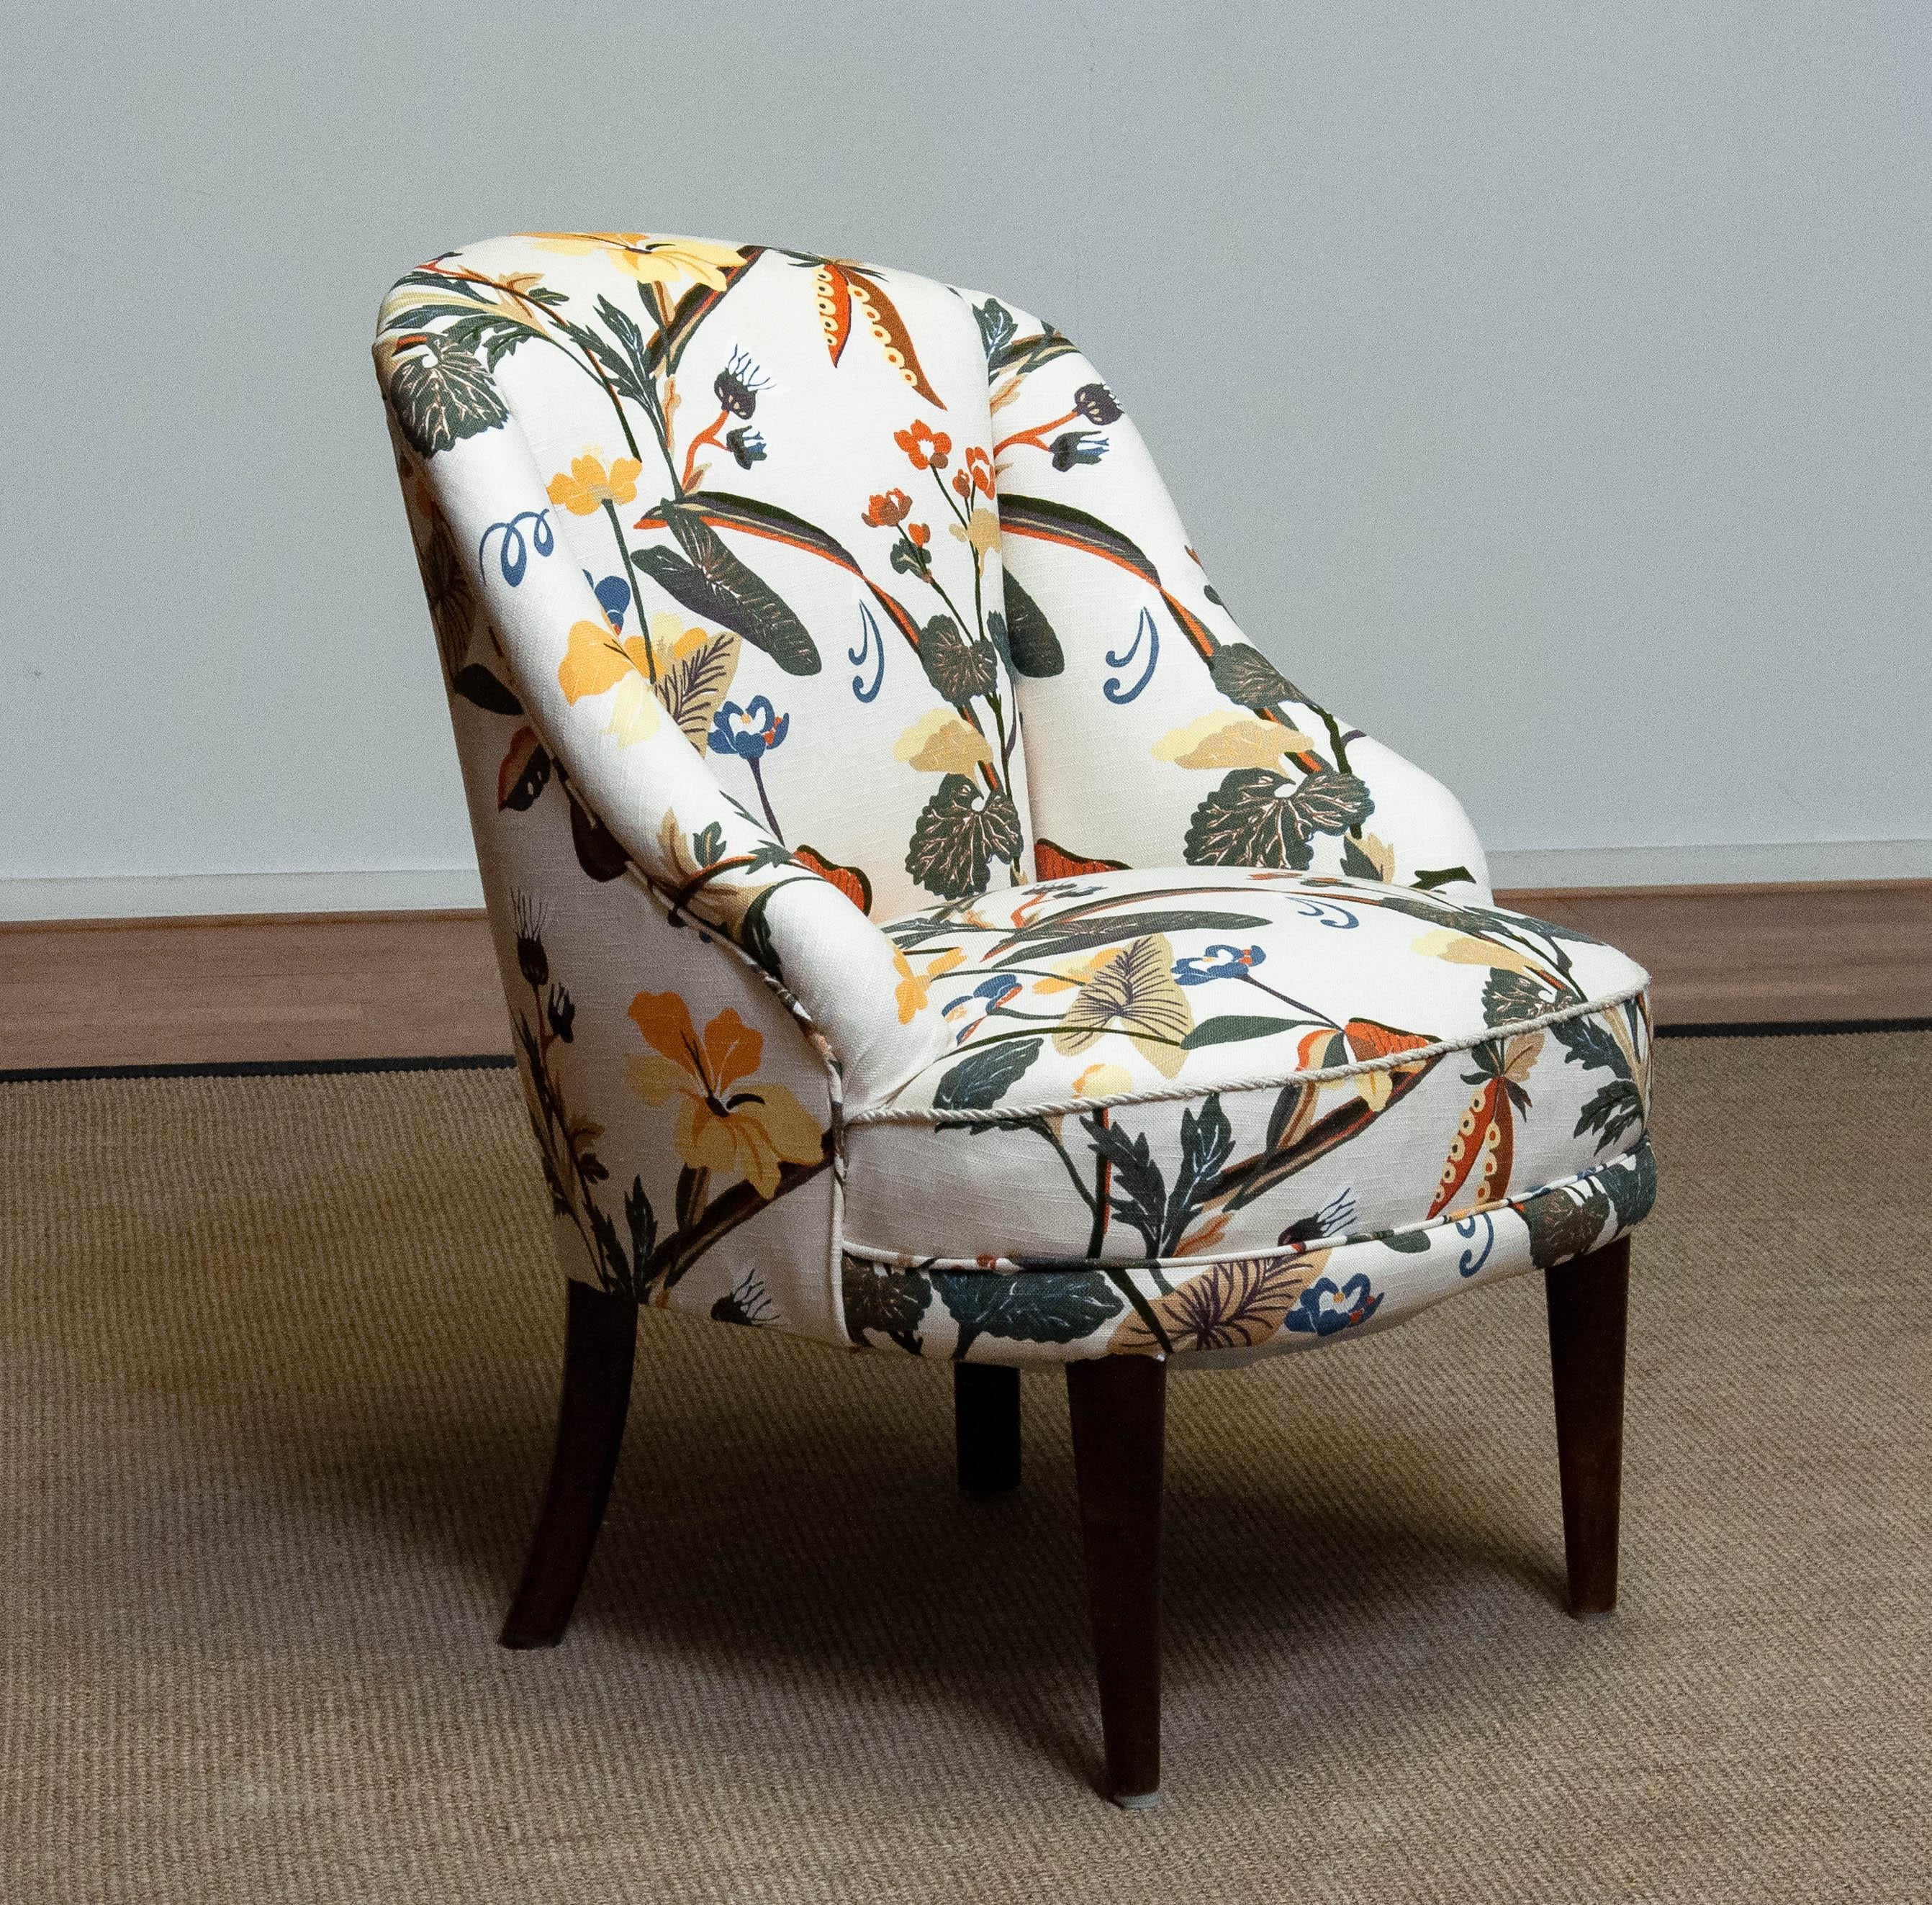 1940s Floral Printed Linen, J. Frank Style, New Upholstered Danish Slipper Chair For Sale 2